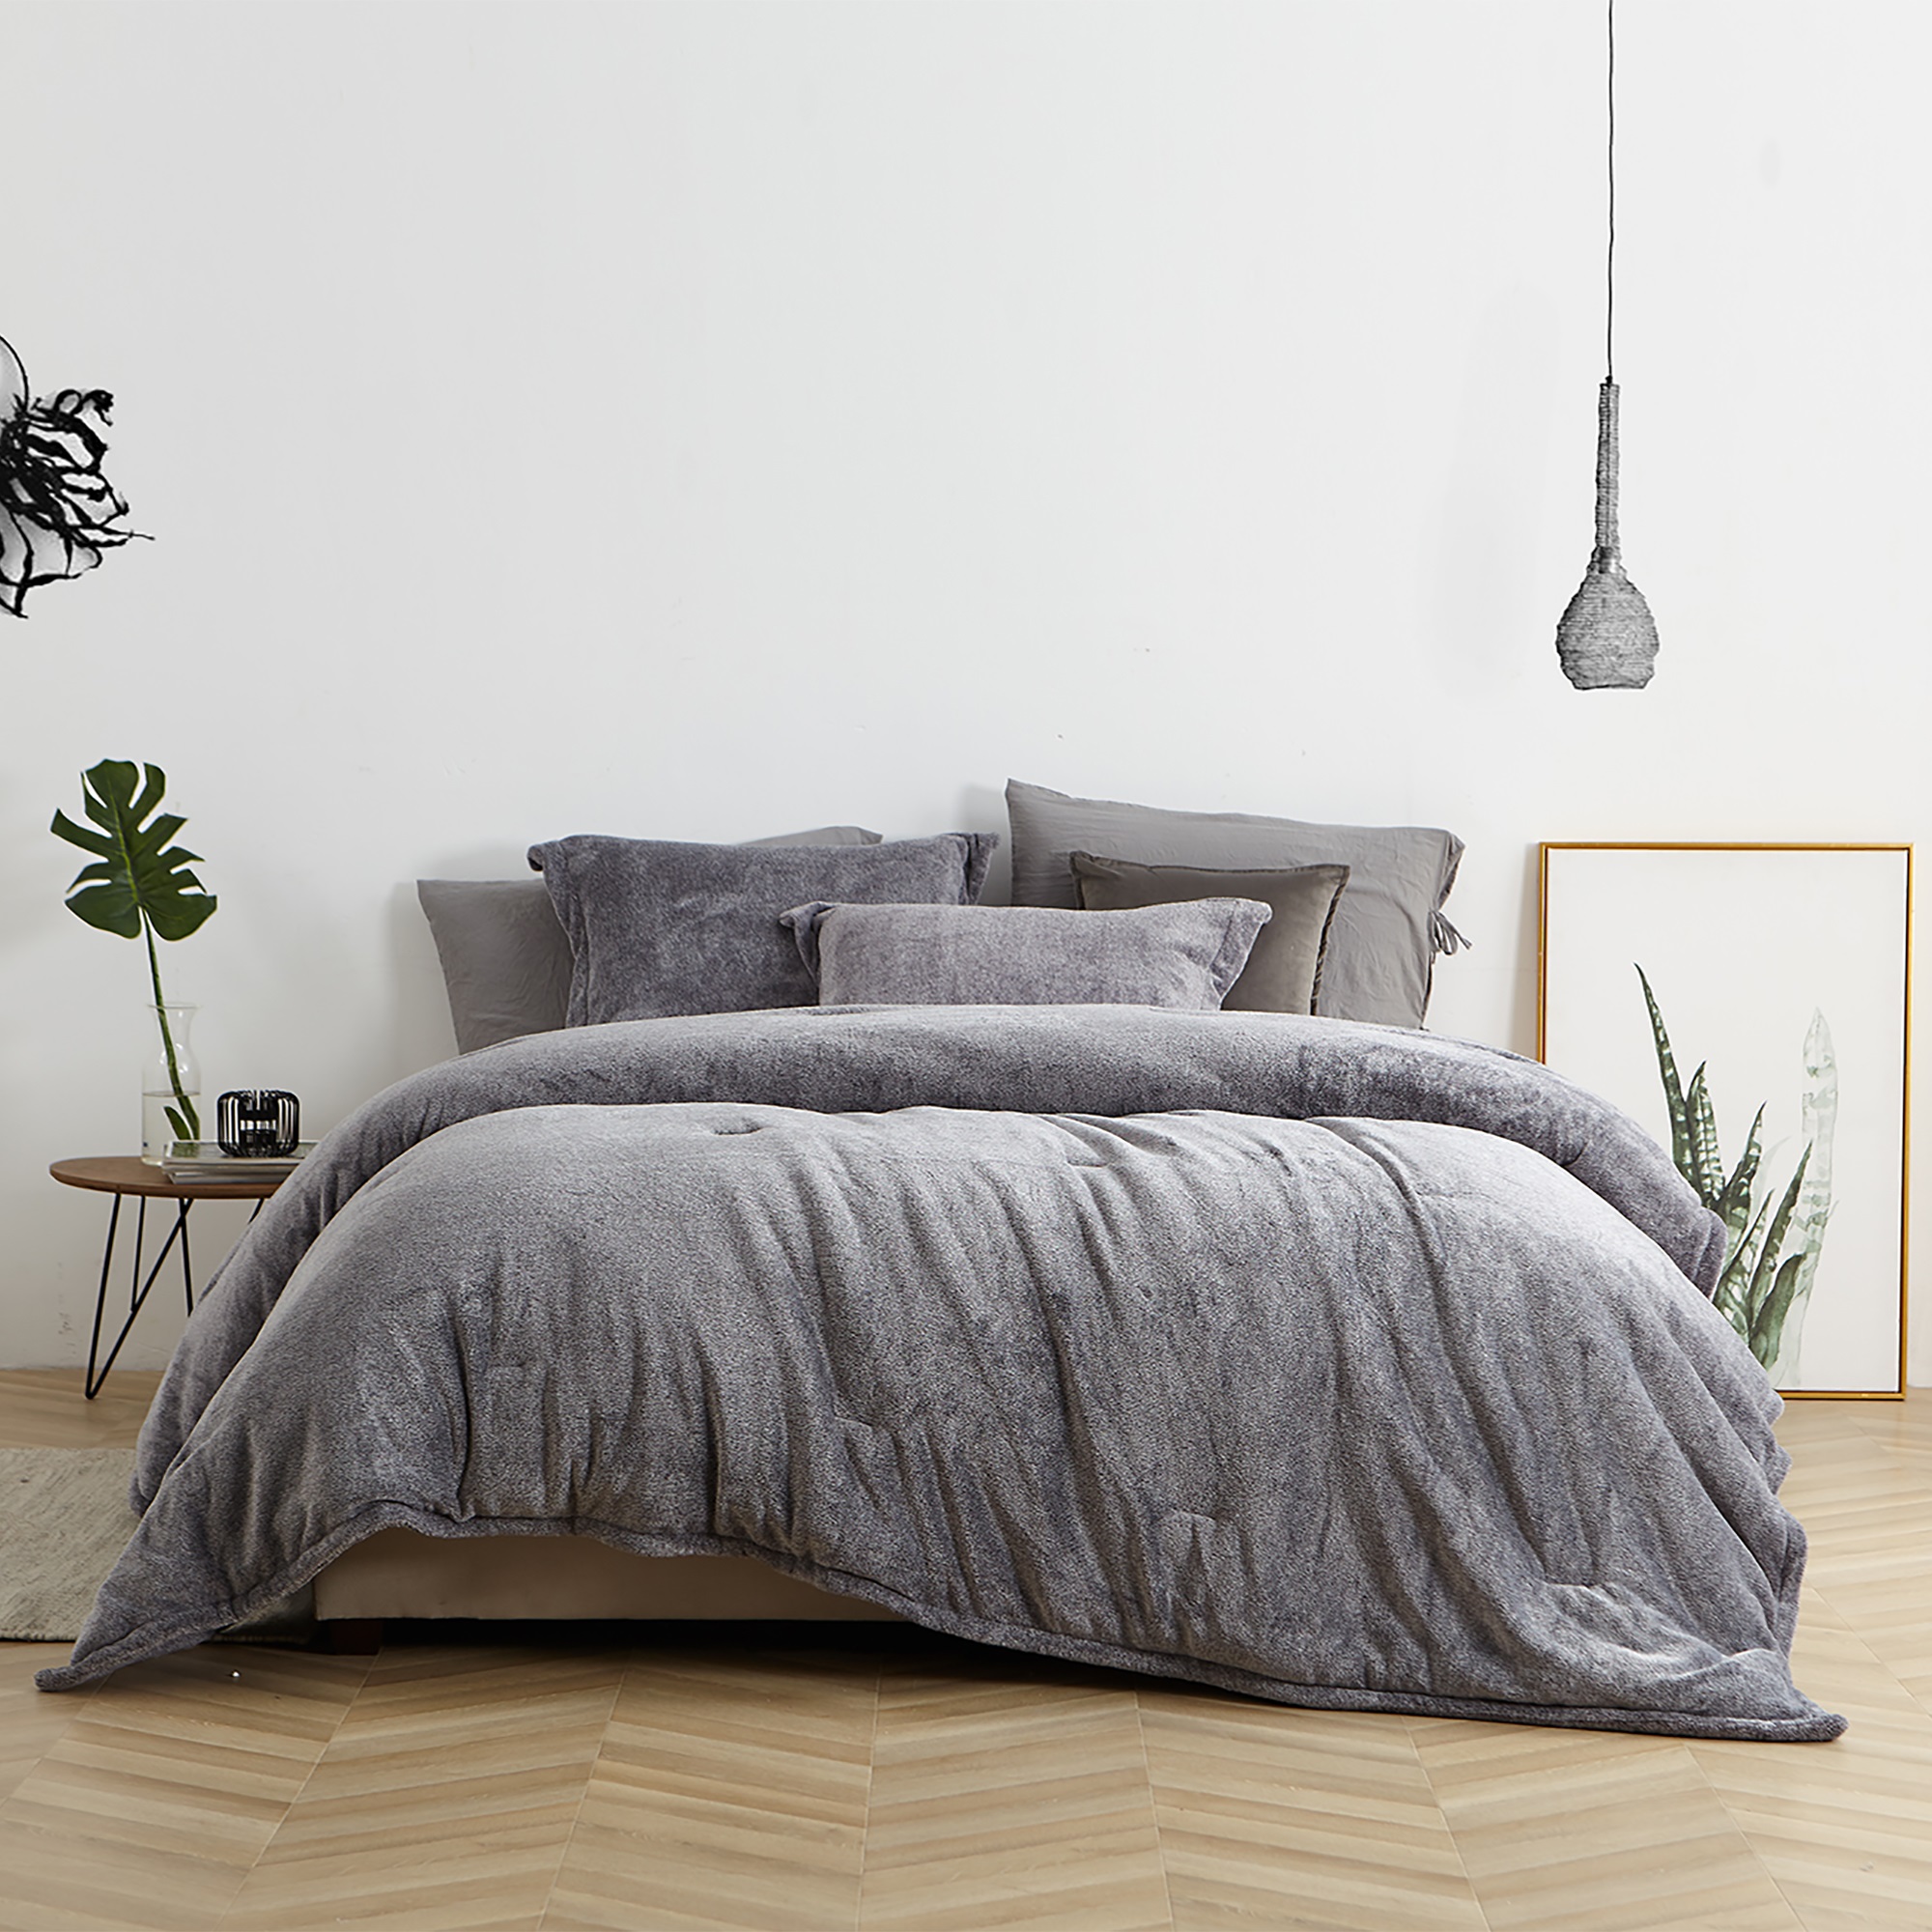 Coma Inducer® Oversized Comforter - UB-Jealy - Slate Black